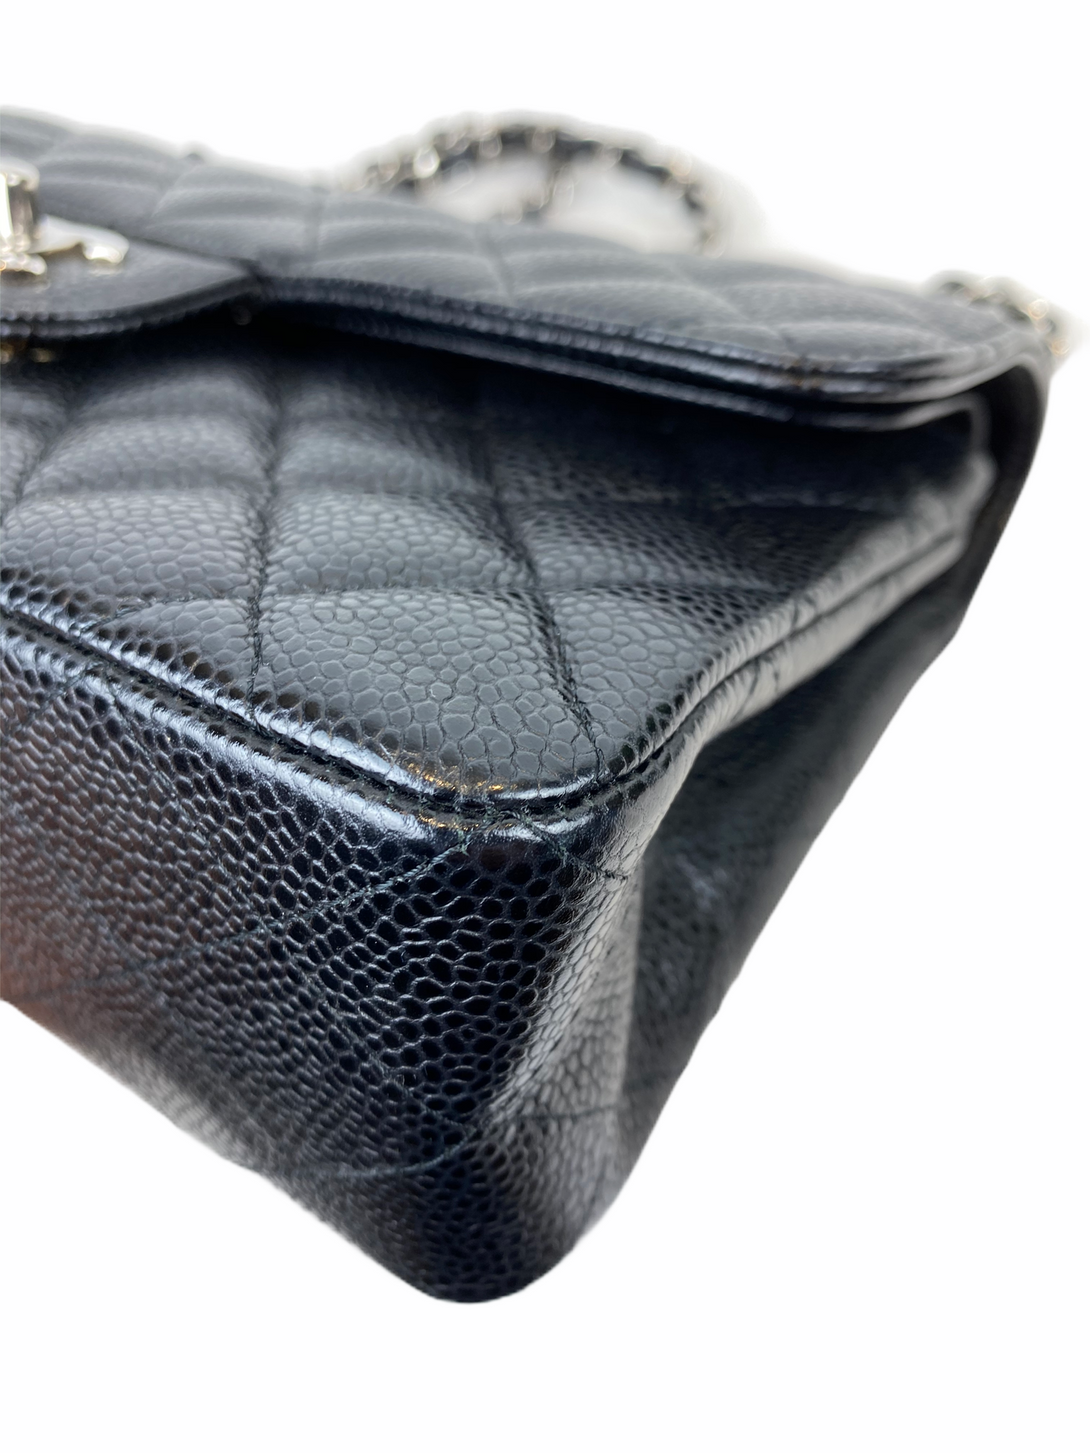 Chanel Small Black Caviar Leather Double Flap - Siopaella Designer Exchange